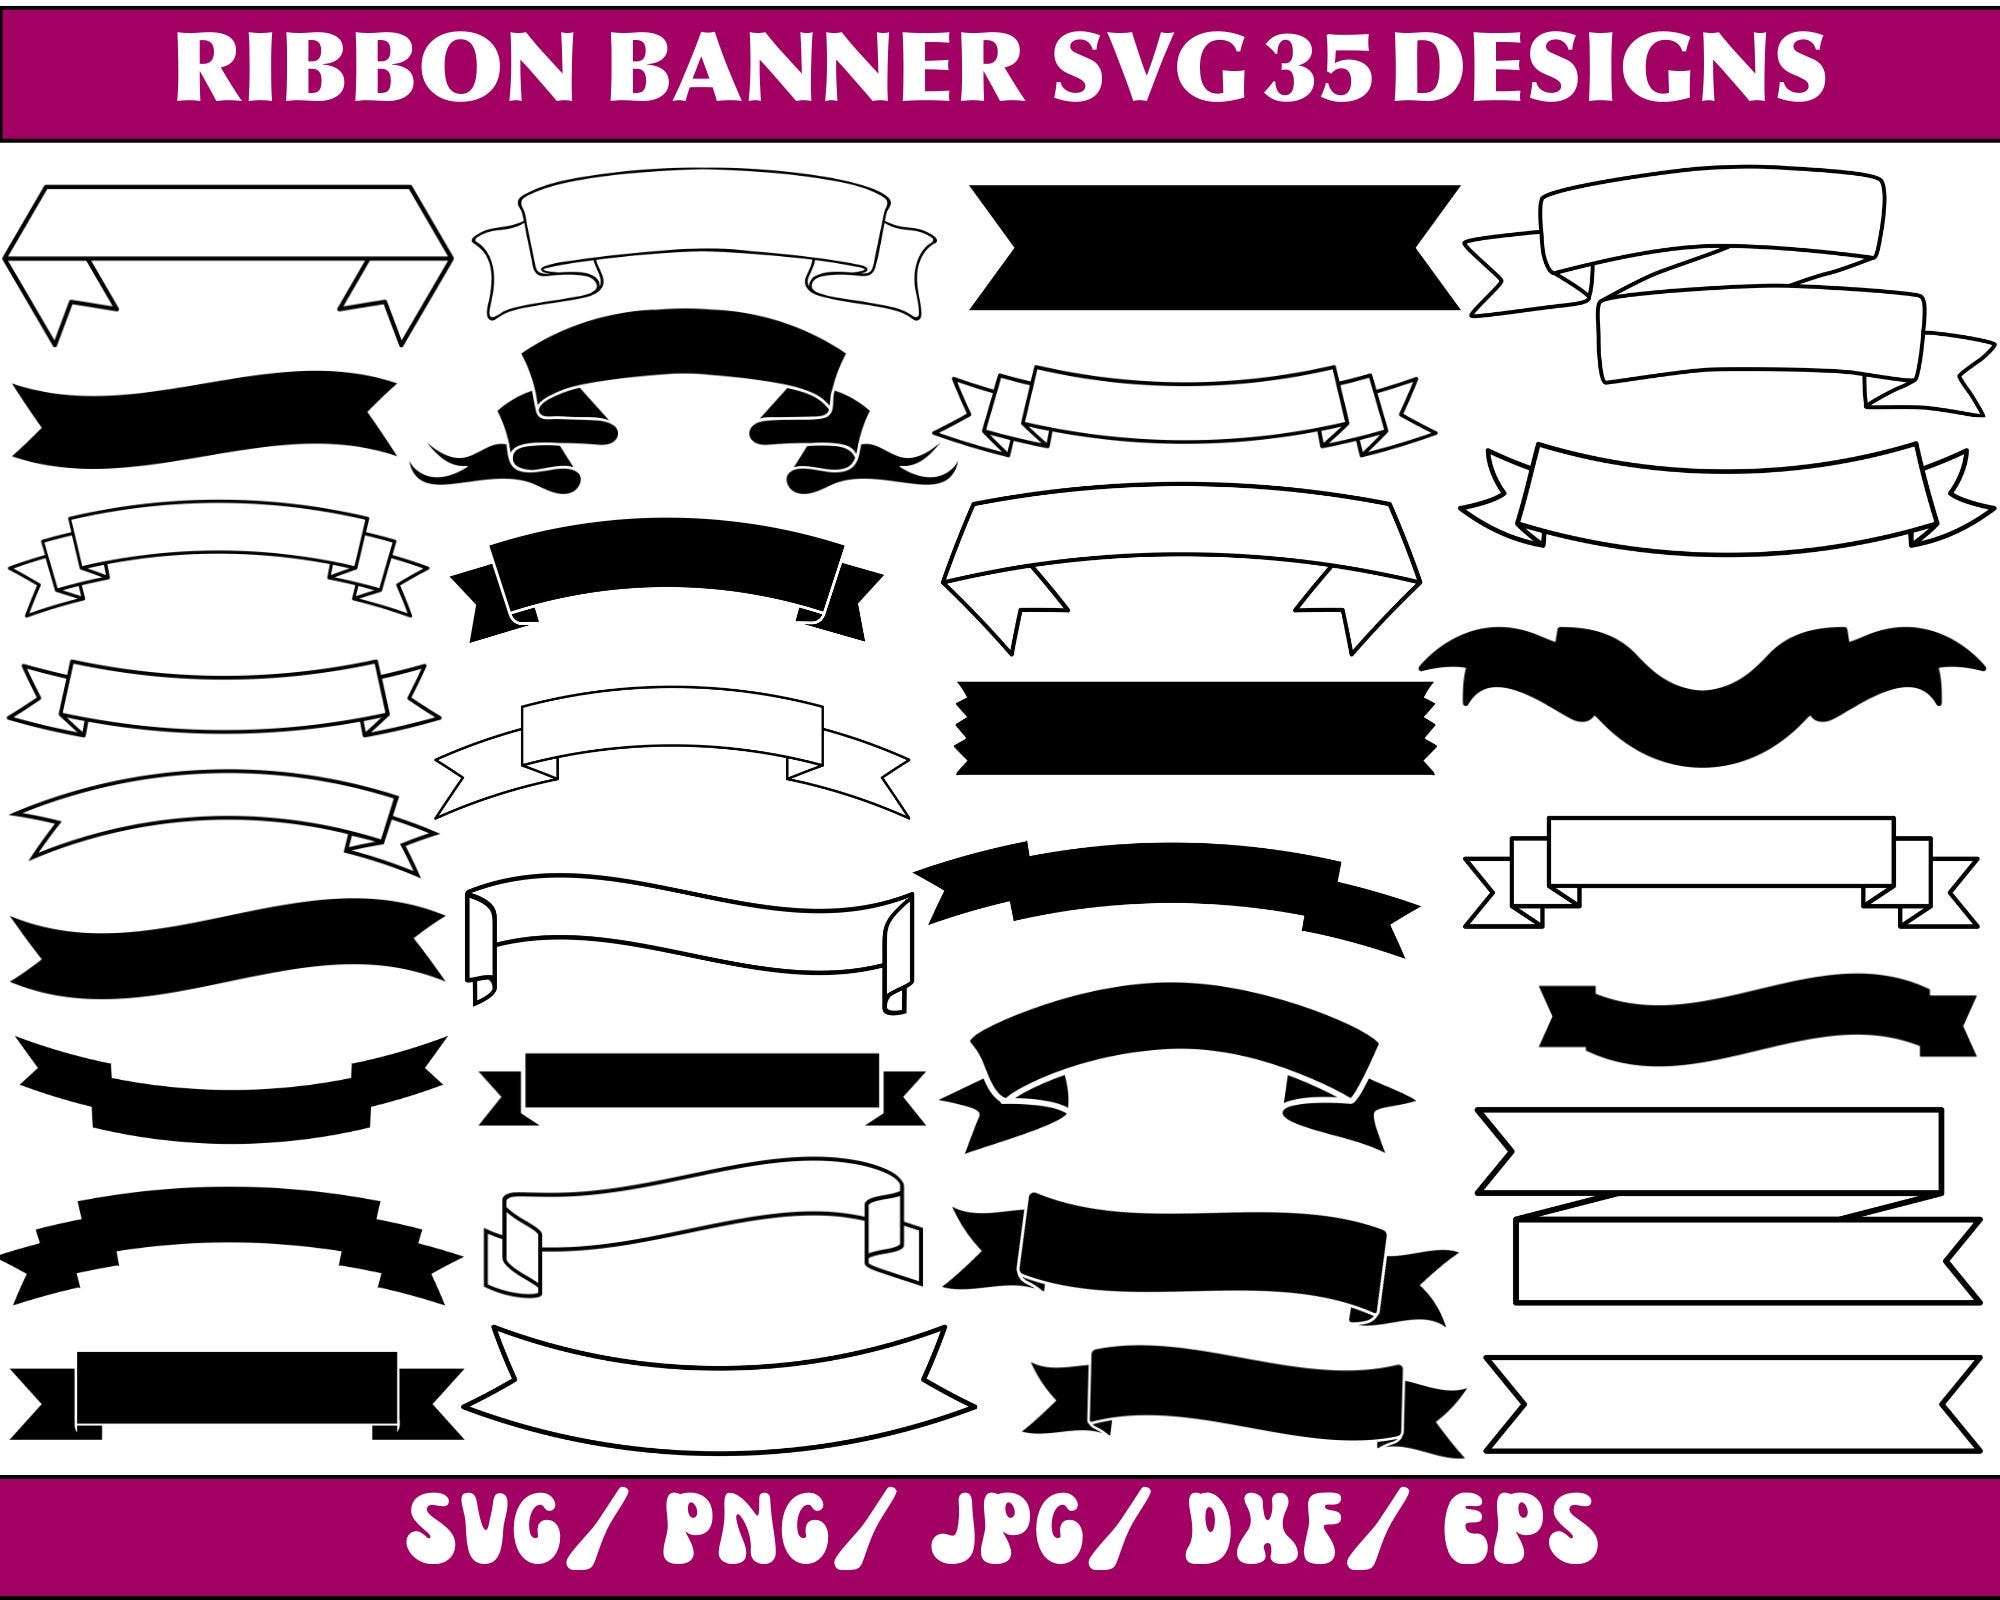 Ribbon Banner Svg Files, Ribbon Banner Png, Ribbon Clipart, Banner Outline, Banner Dxf, Cricut Cut Files, Banner Vector, Instant Download